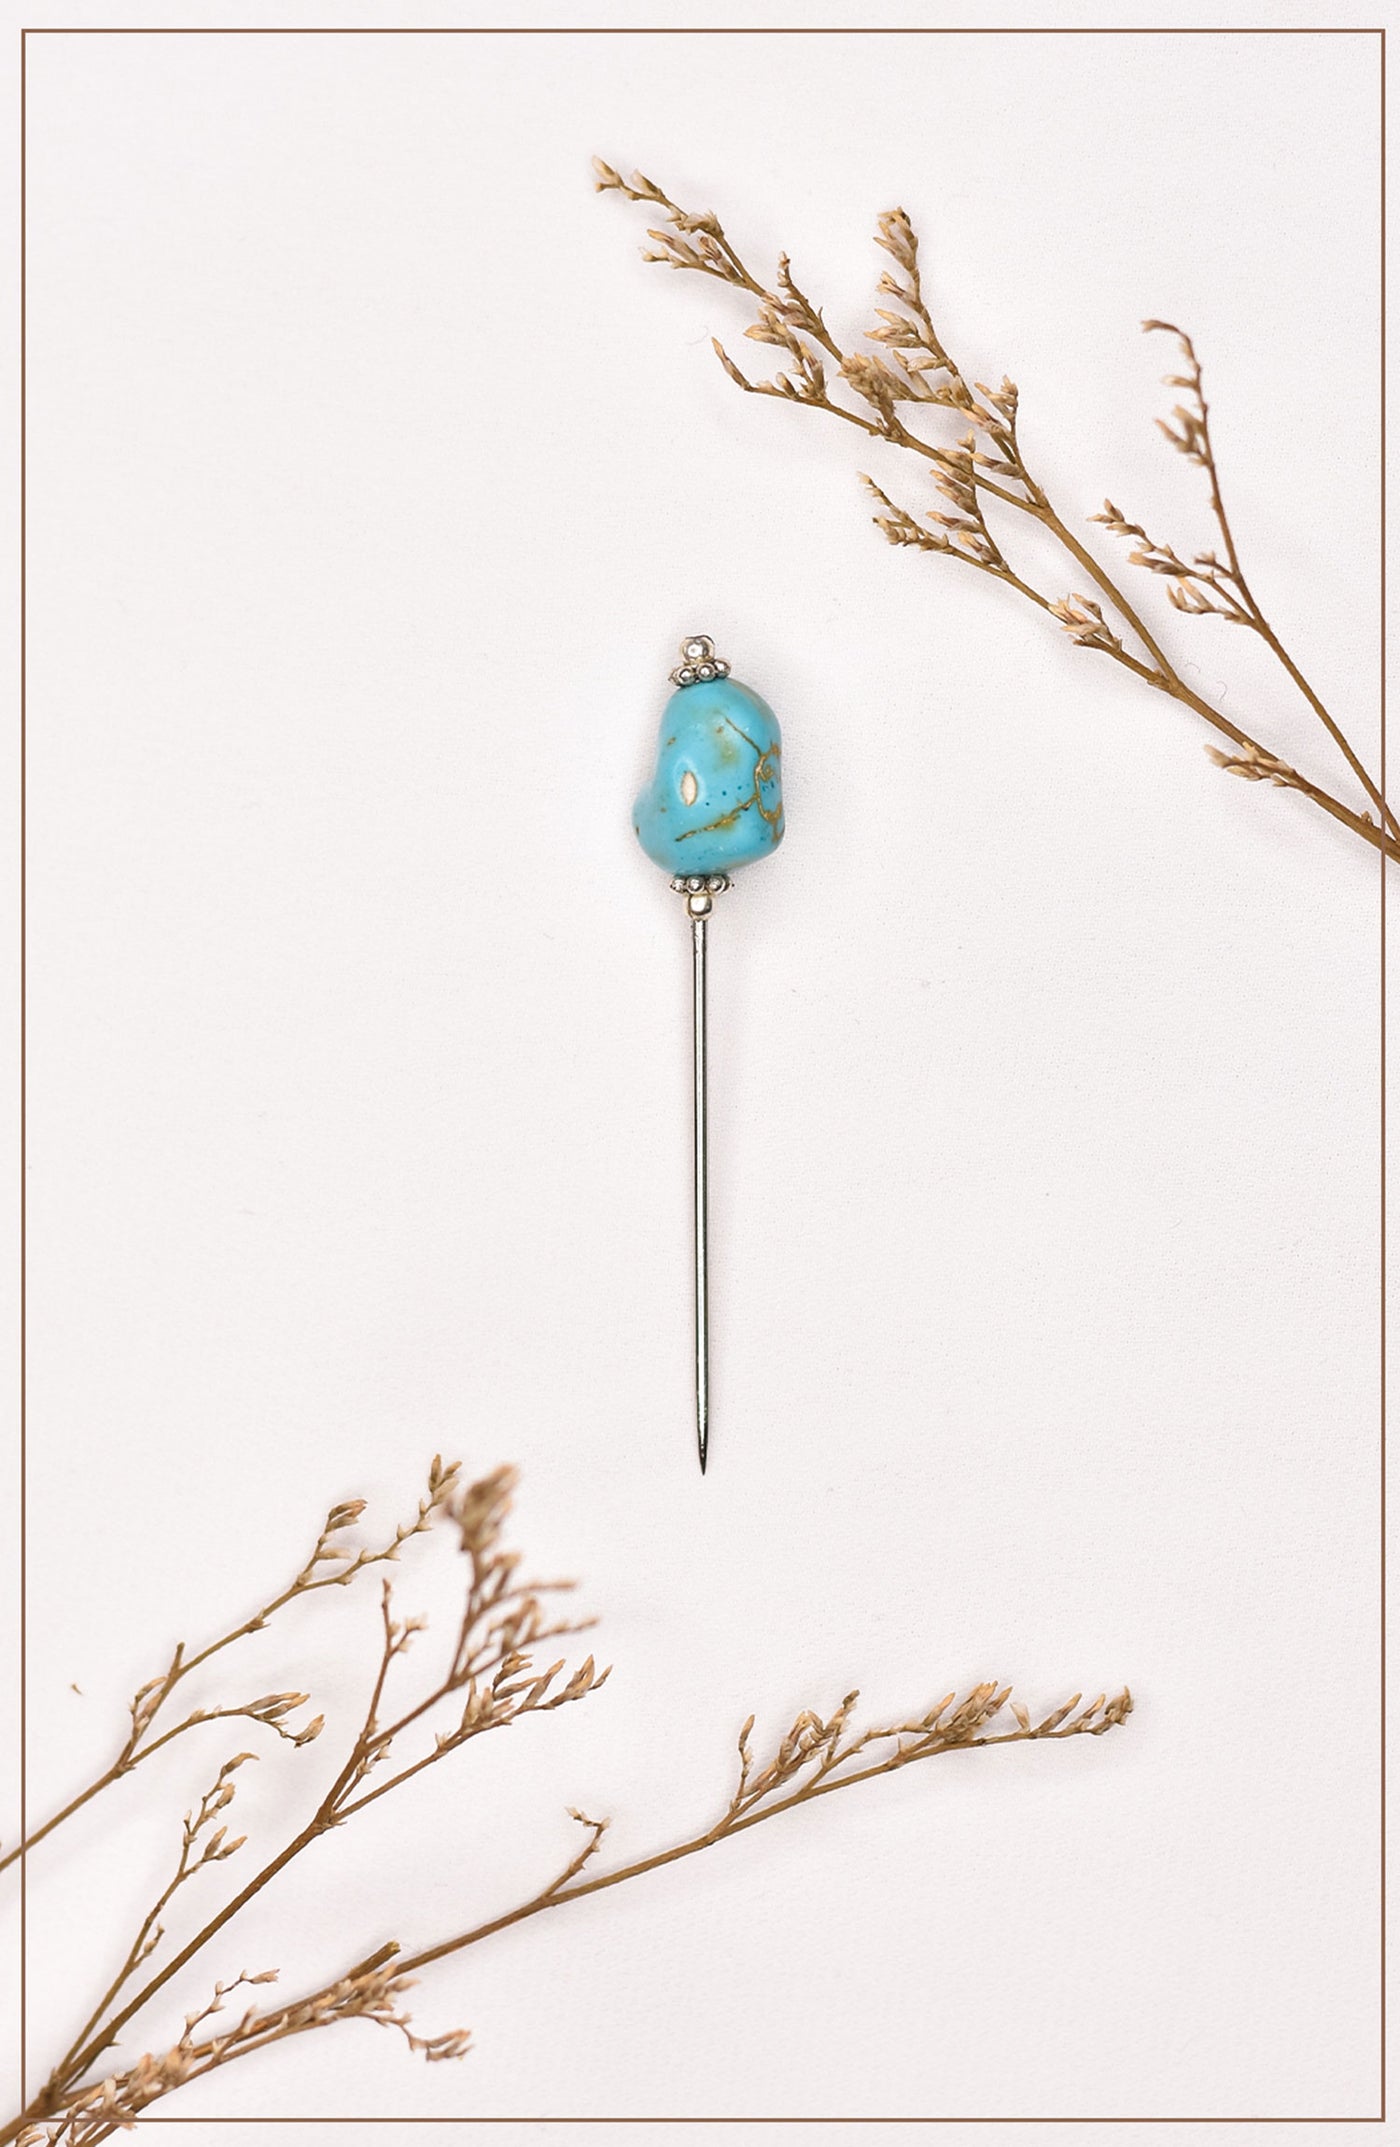 hijab pin with beautiful blue magnesite stone